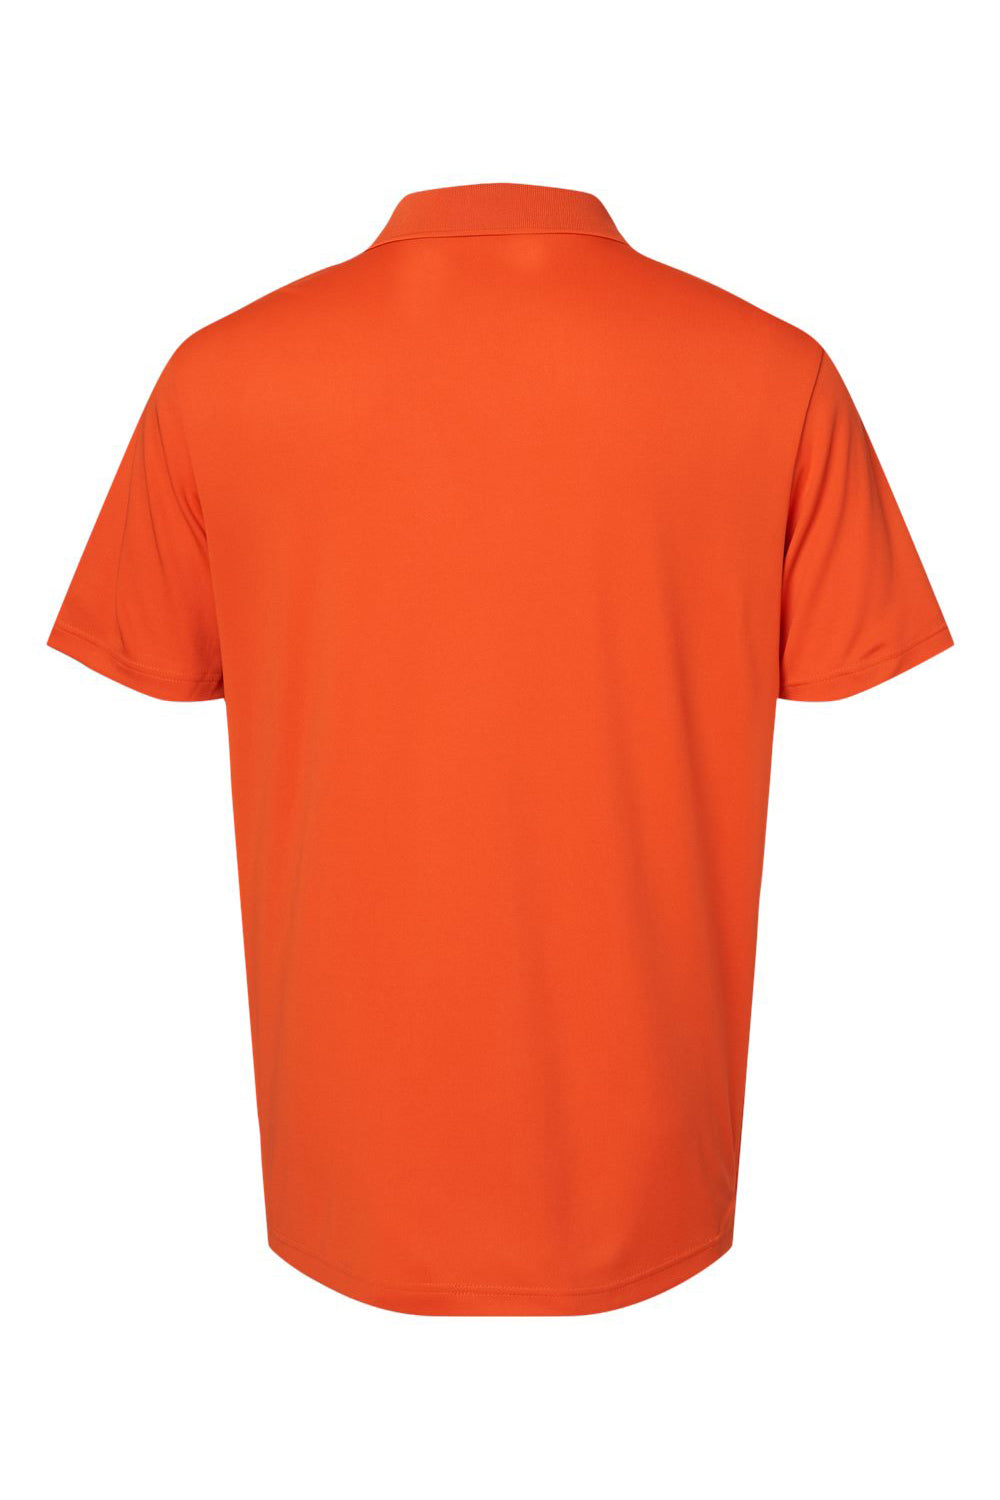 Adidas A230 Mens Performance Short Sleeve Polo Shirt Orange Flat Back